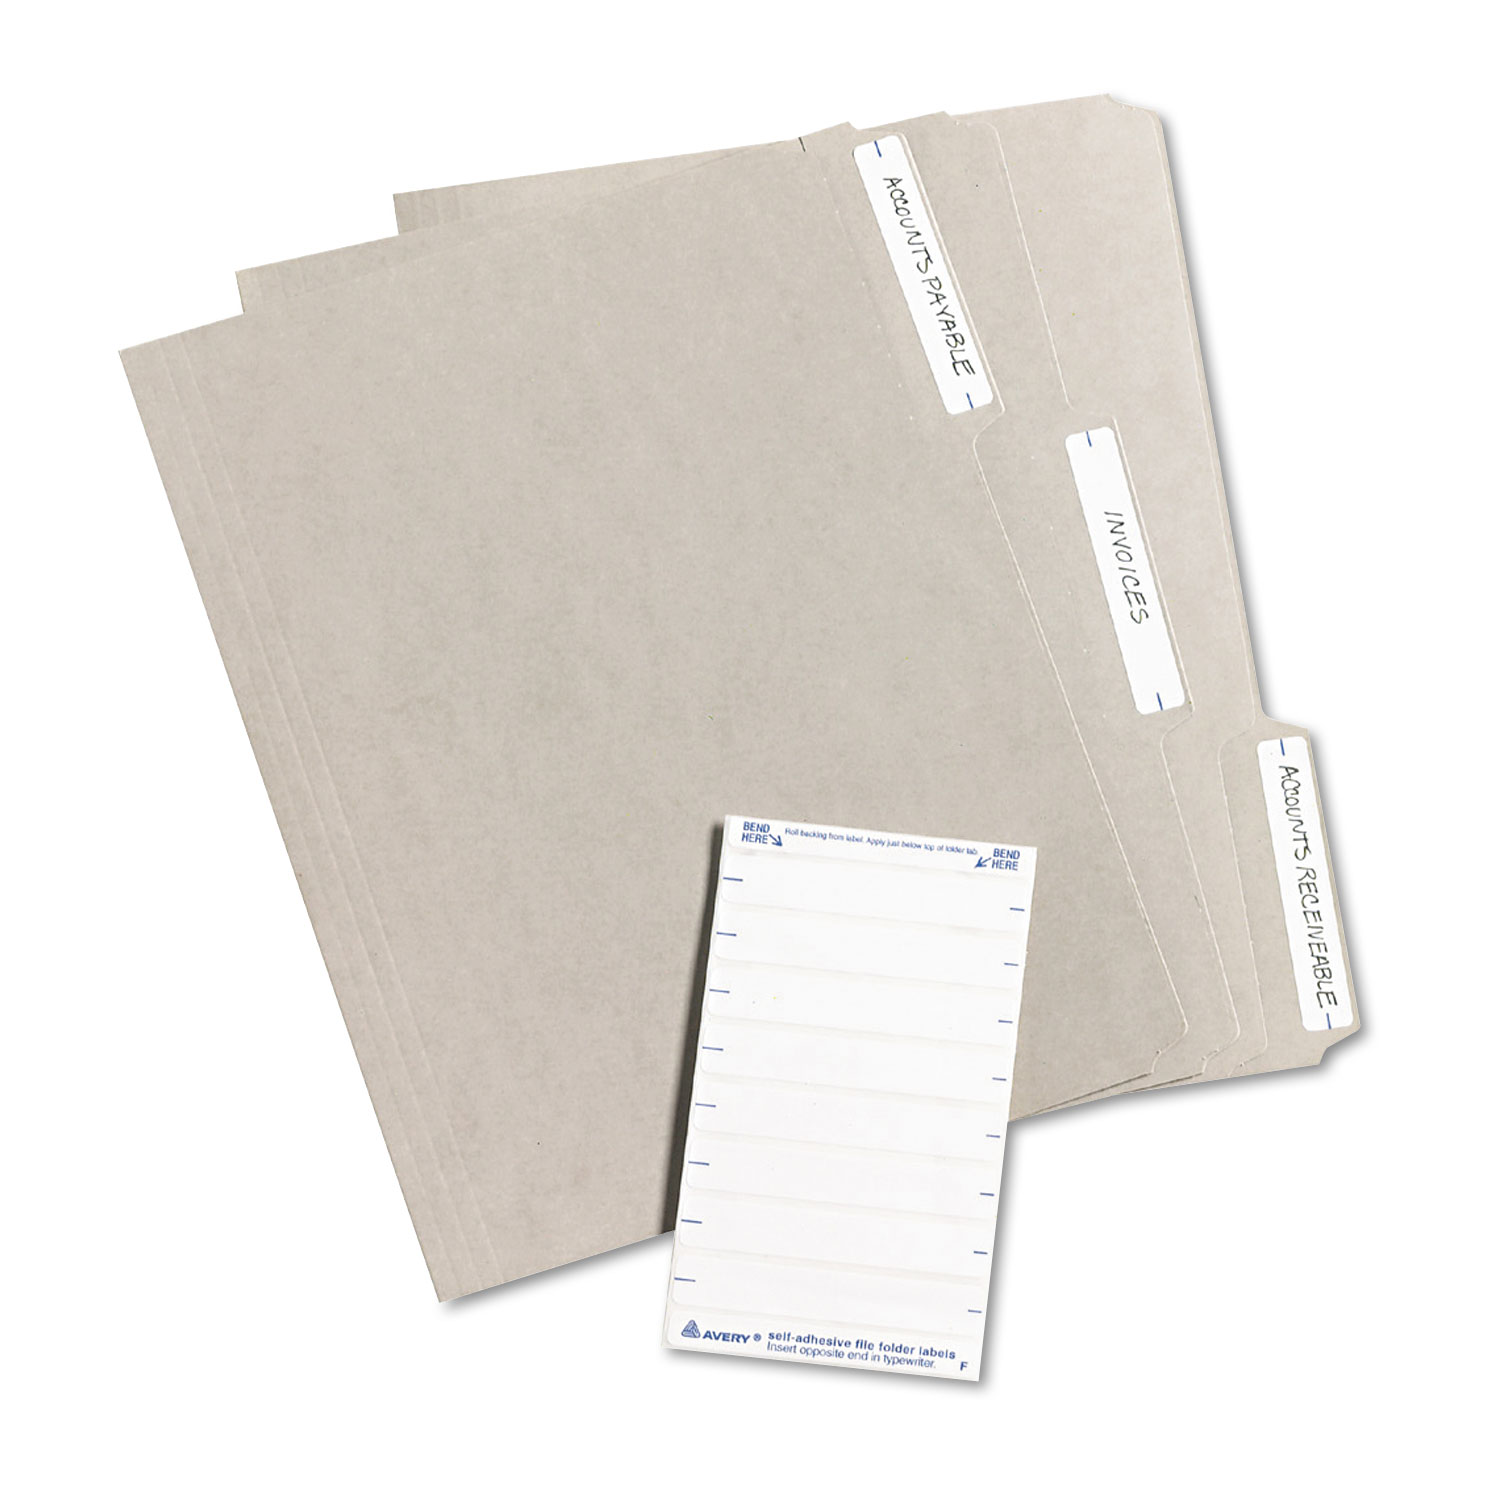 Print or Write File Folder Labels, 11/16 x 3 7/16, White, 252/Pack